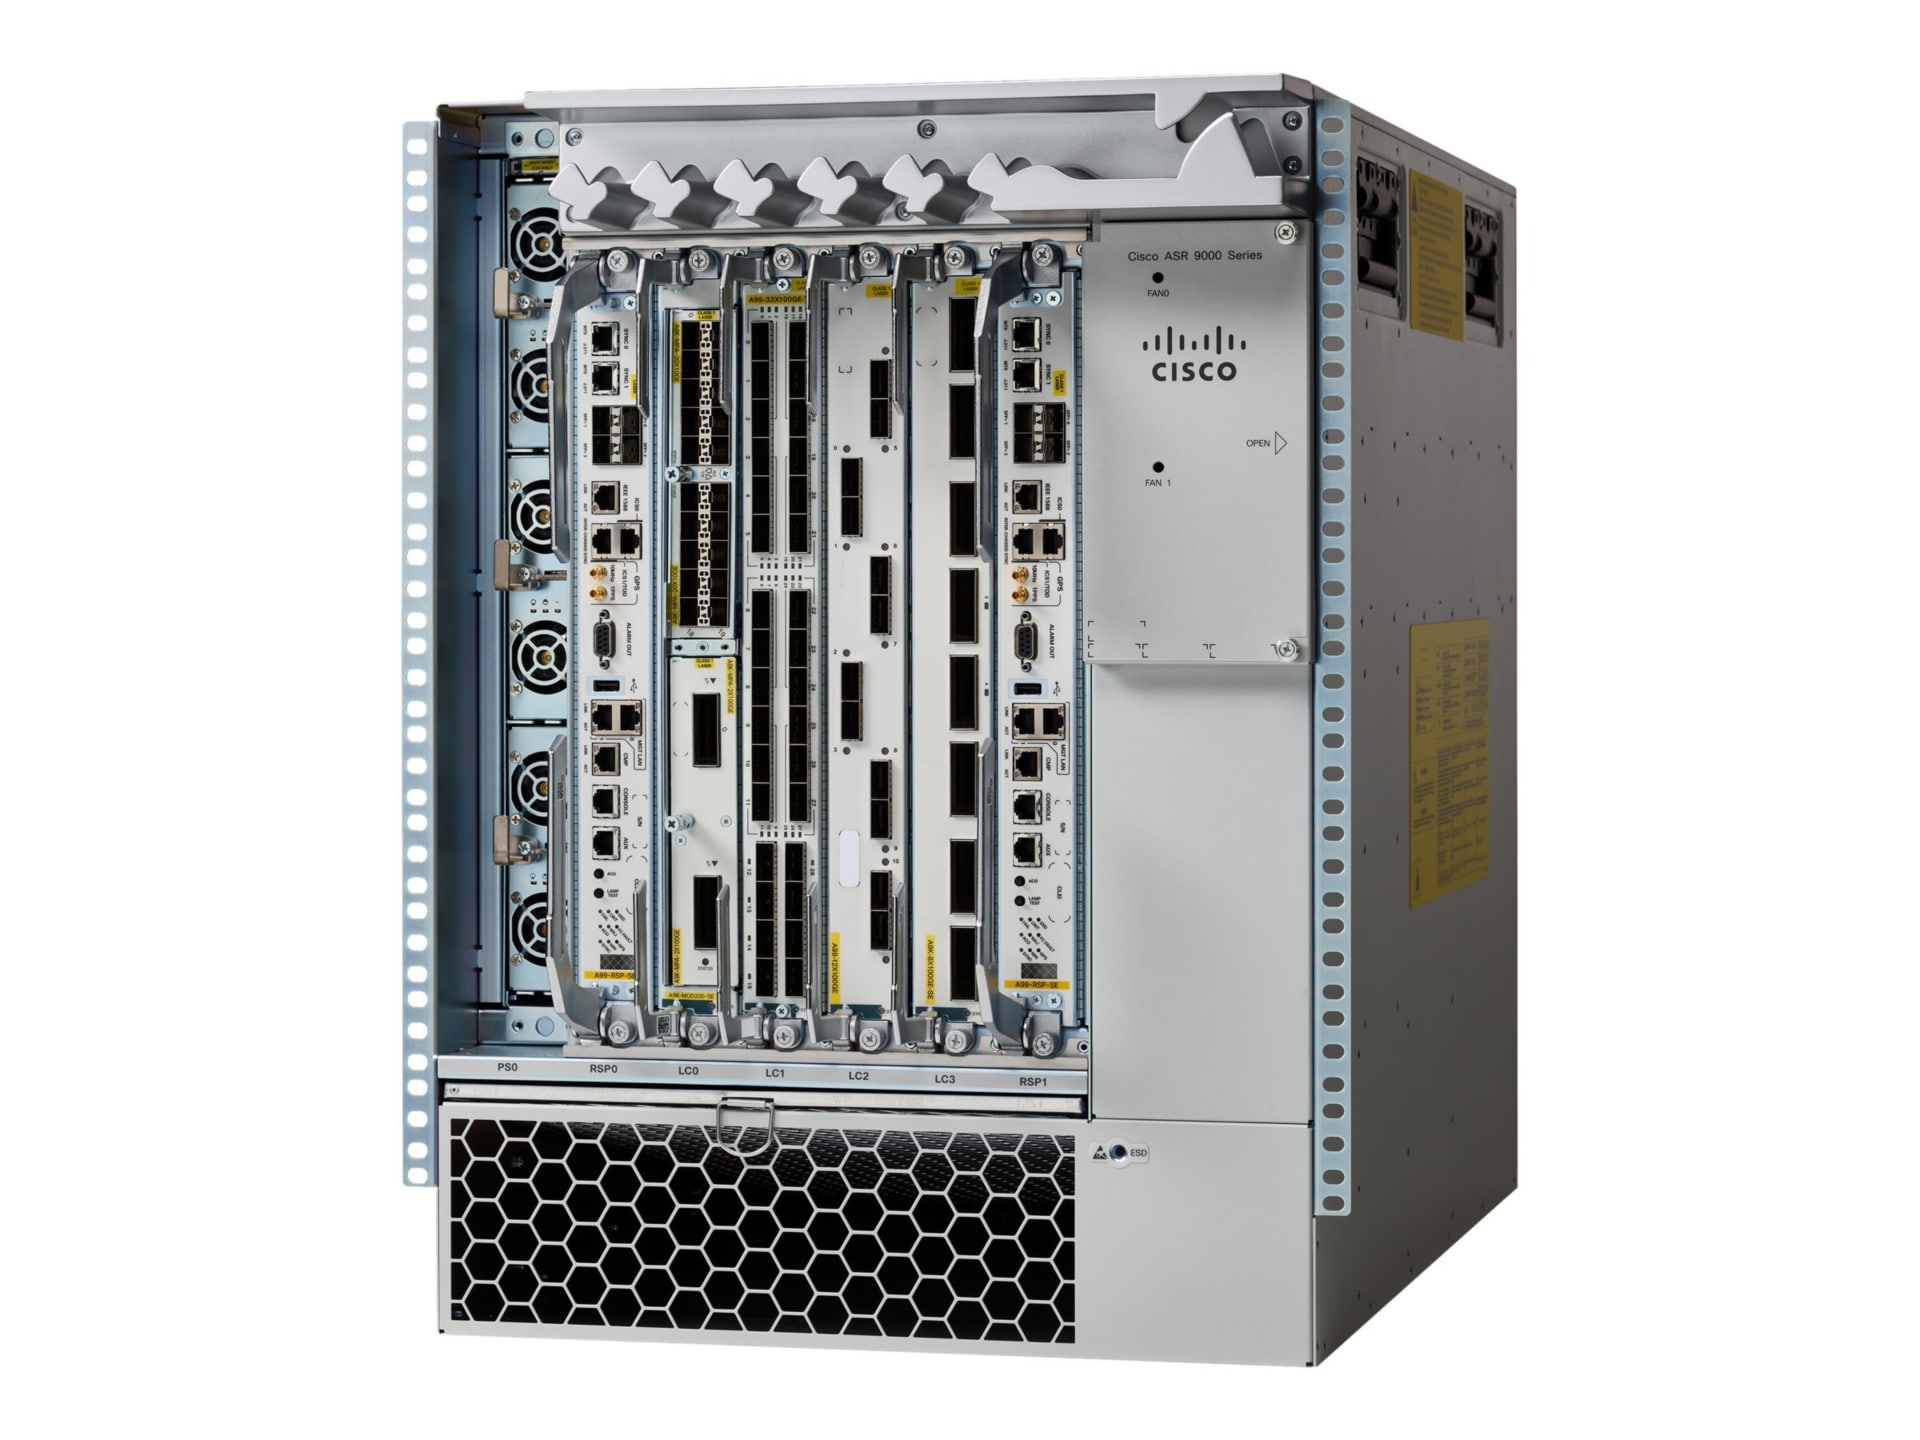 Cisco 9906 4 Line Card Slot Aggregation Service Router